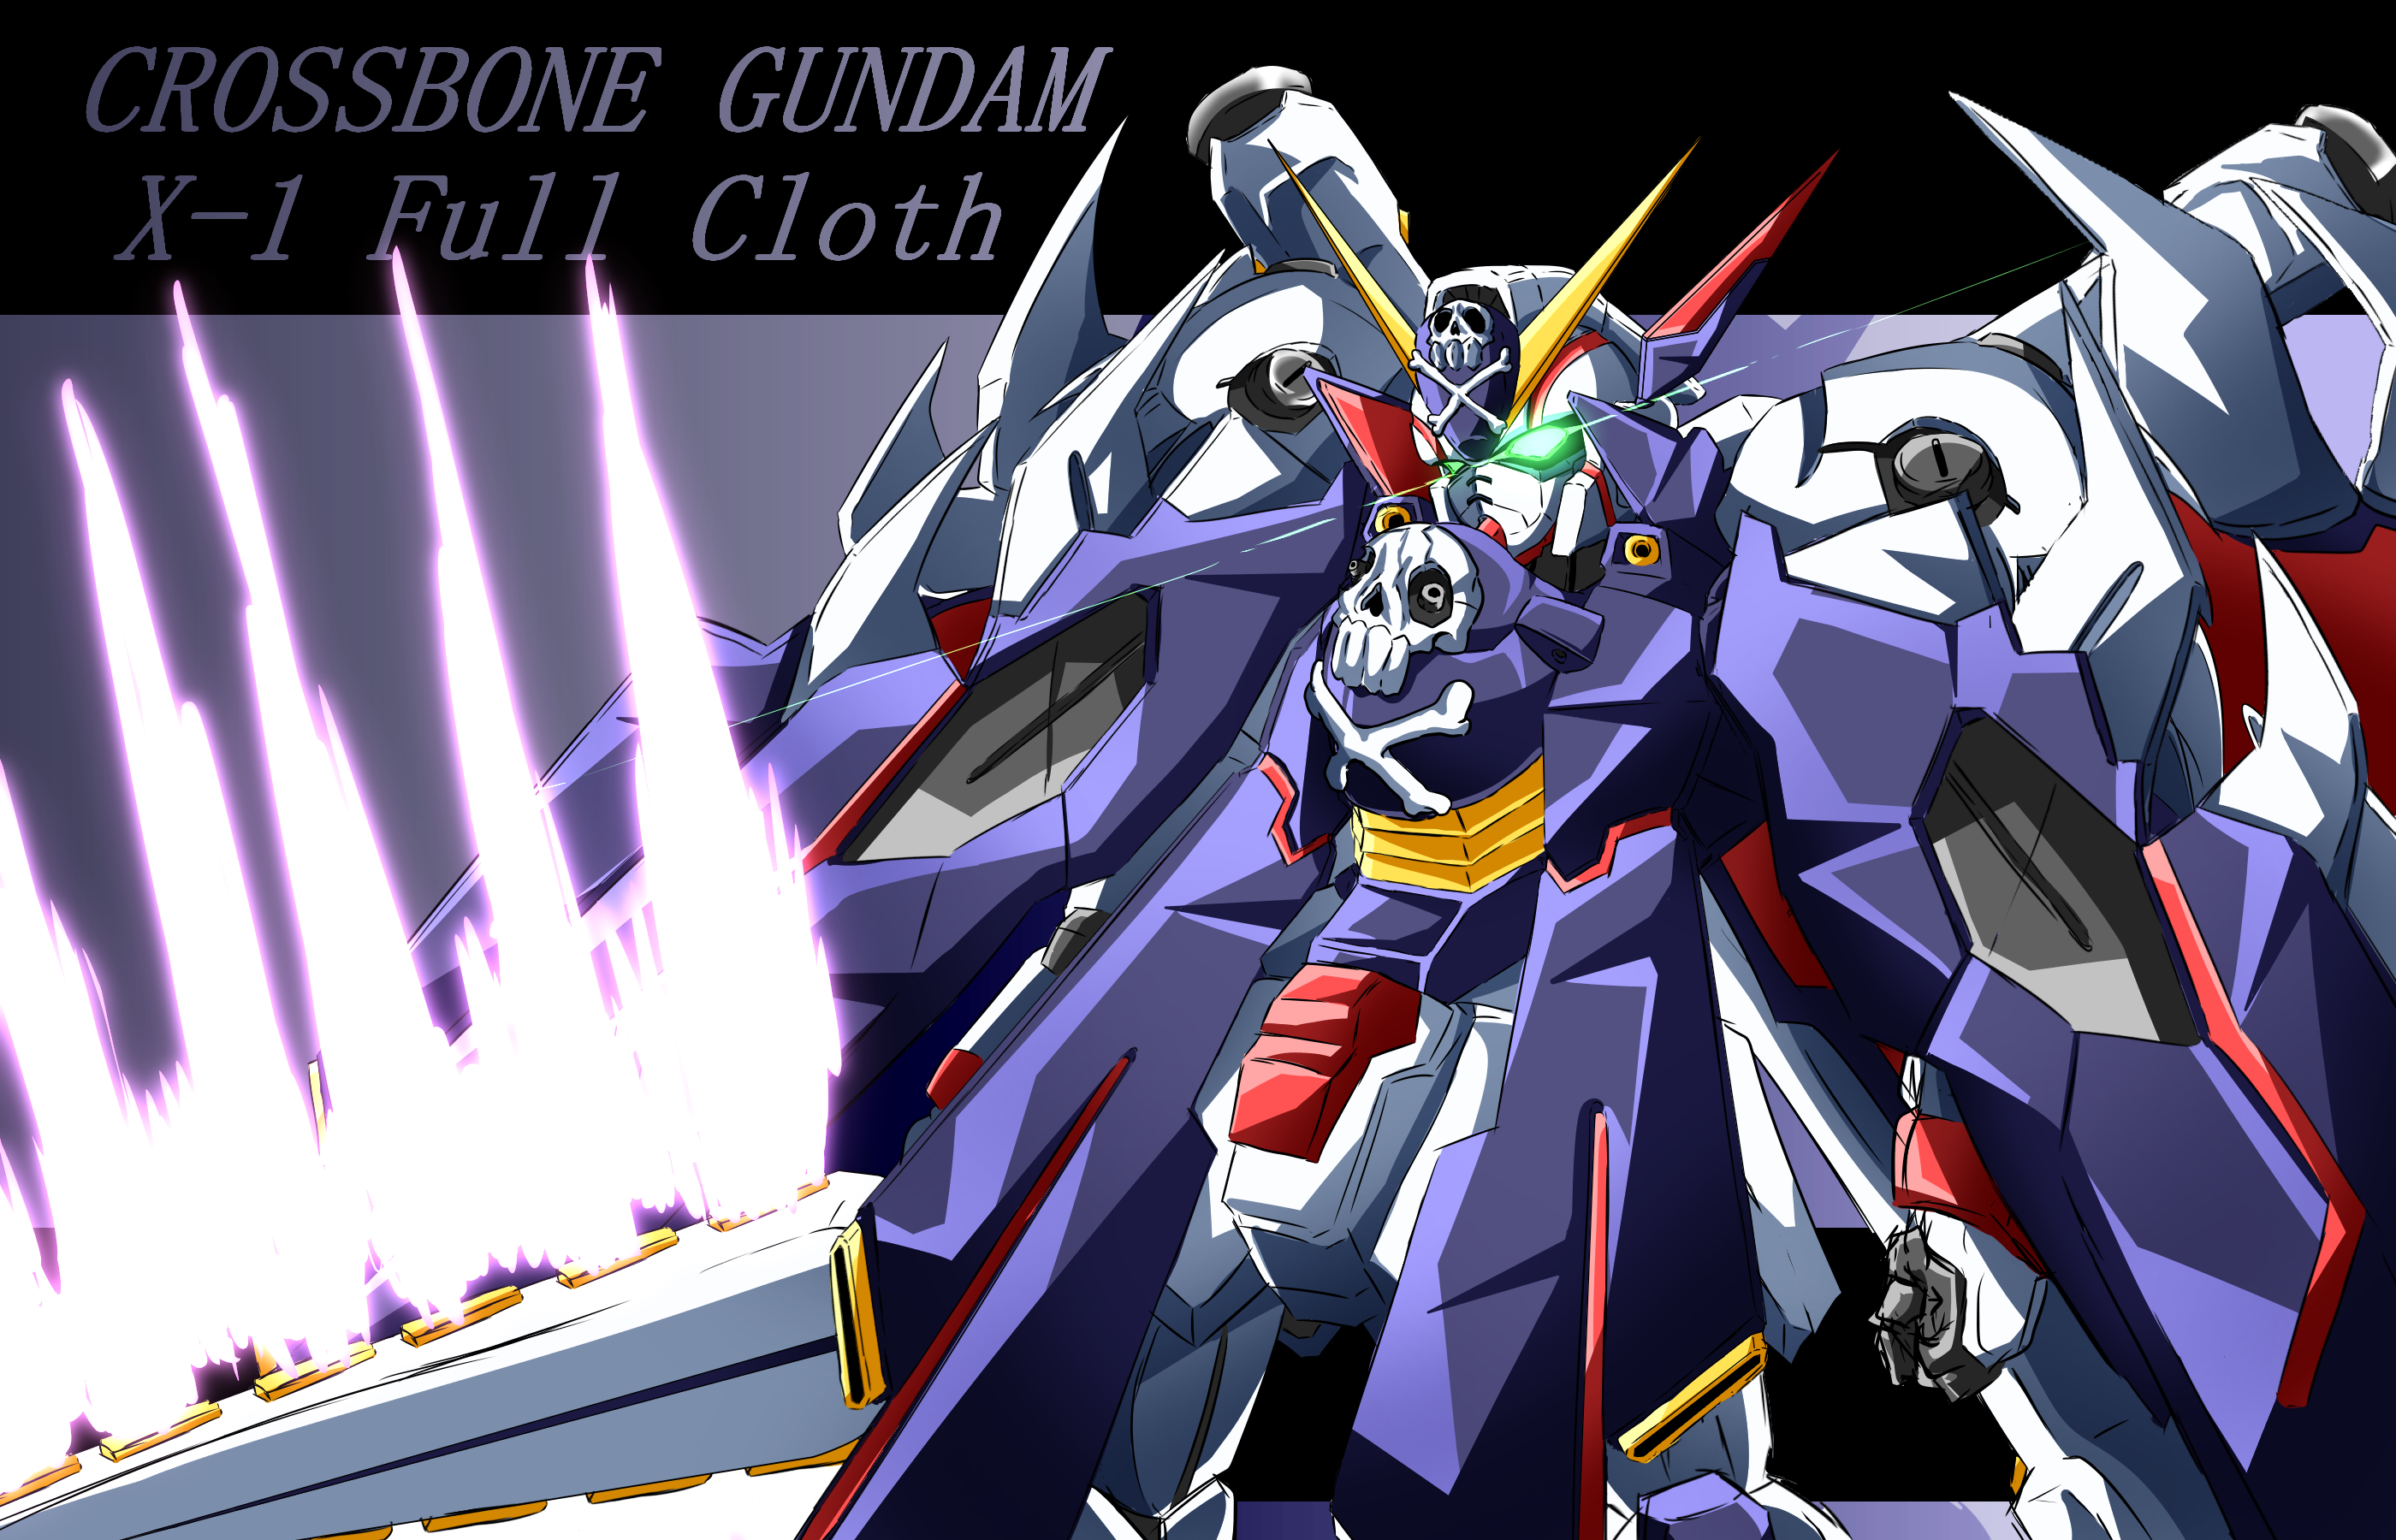 Anime Mech Gundam Super Robot Wars Mobile Suit Crossbone Gundam Crossbone Gundam X 1 Full Cloth Artw 2800x1800